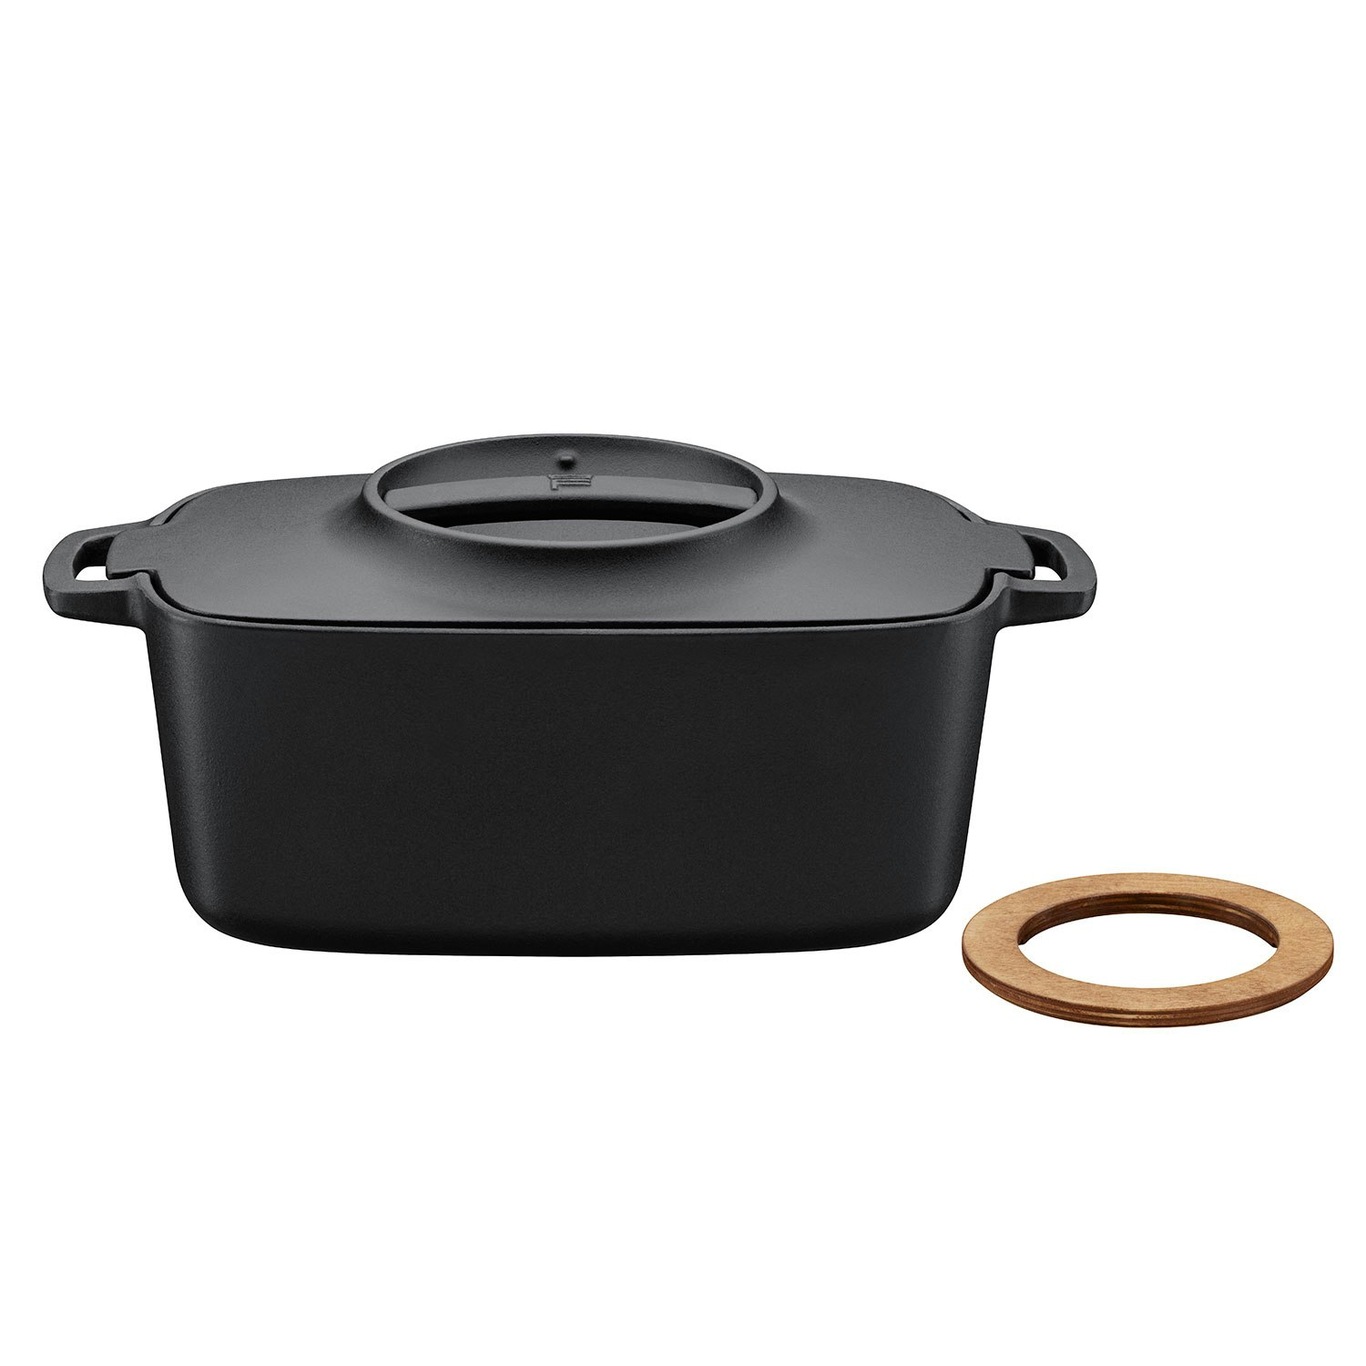 https://royaldesign.com/image/2/fiskars-norden-casserole-oval-cast-iron-5-l-1?w=800&quality=80